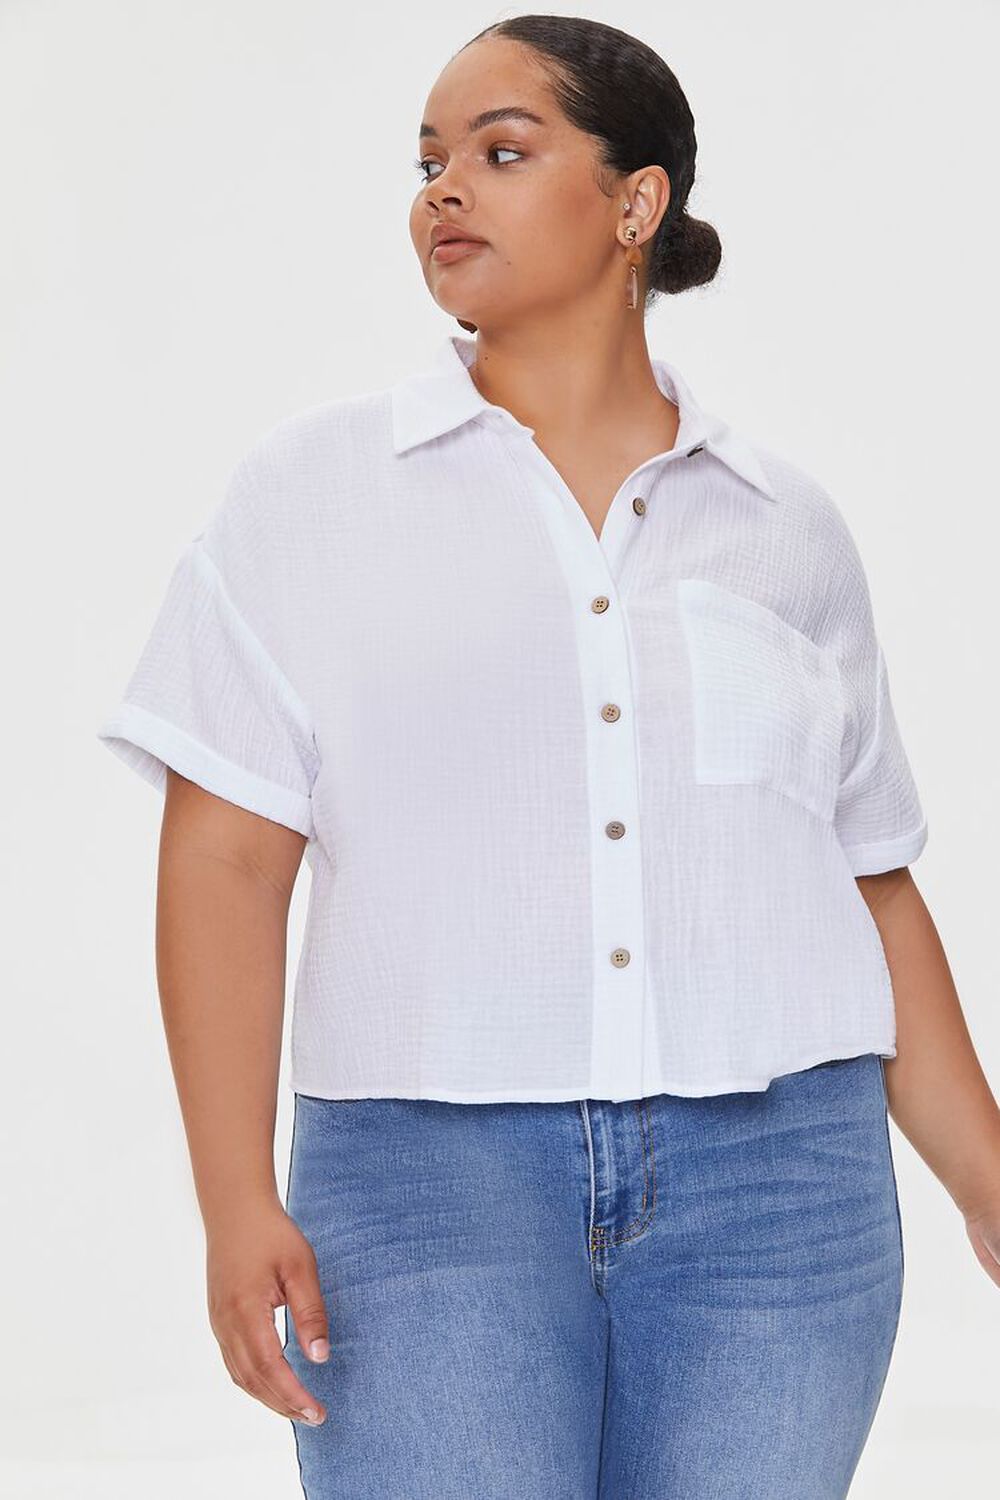 WHITE Plus Size Cotton Pocket Shirt, image 1